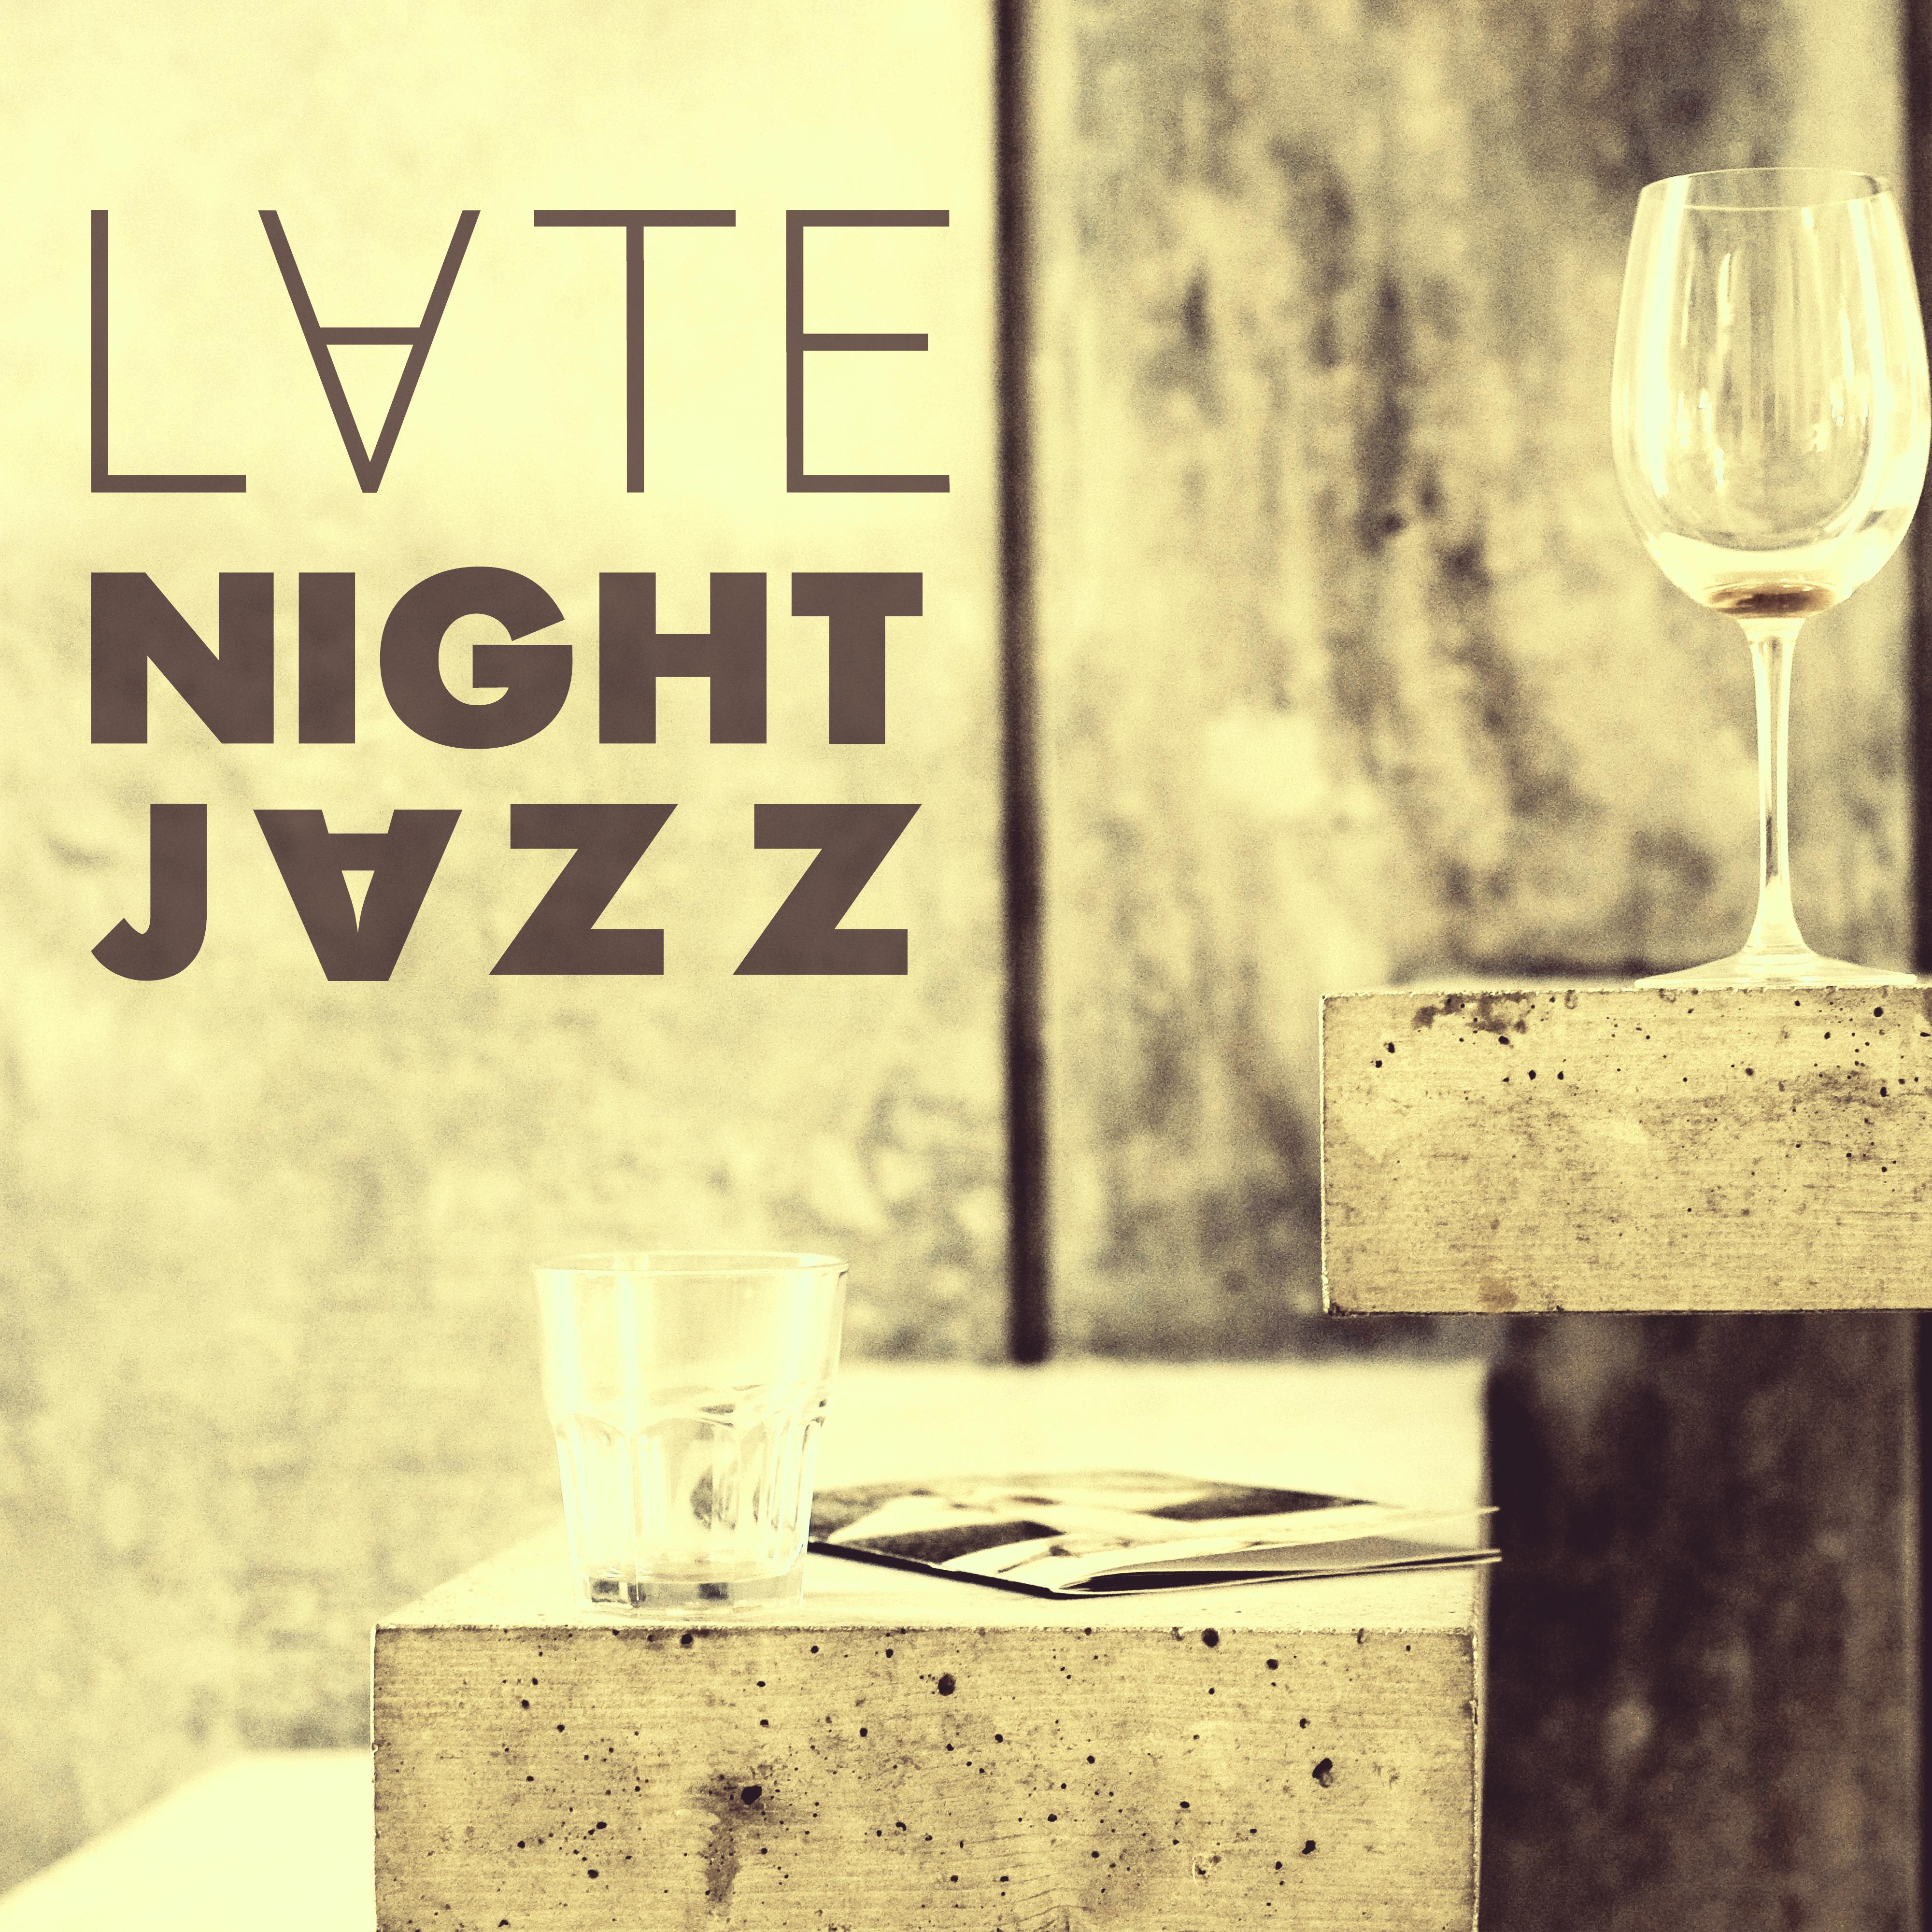 Latte Night Jazz – Best Instrumental Jazz Sounds, Jazz Piano Sounds, Relaxing Coffee, Jazz Lounge, Easy Listening Music